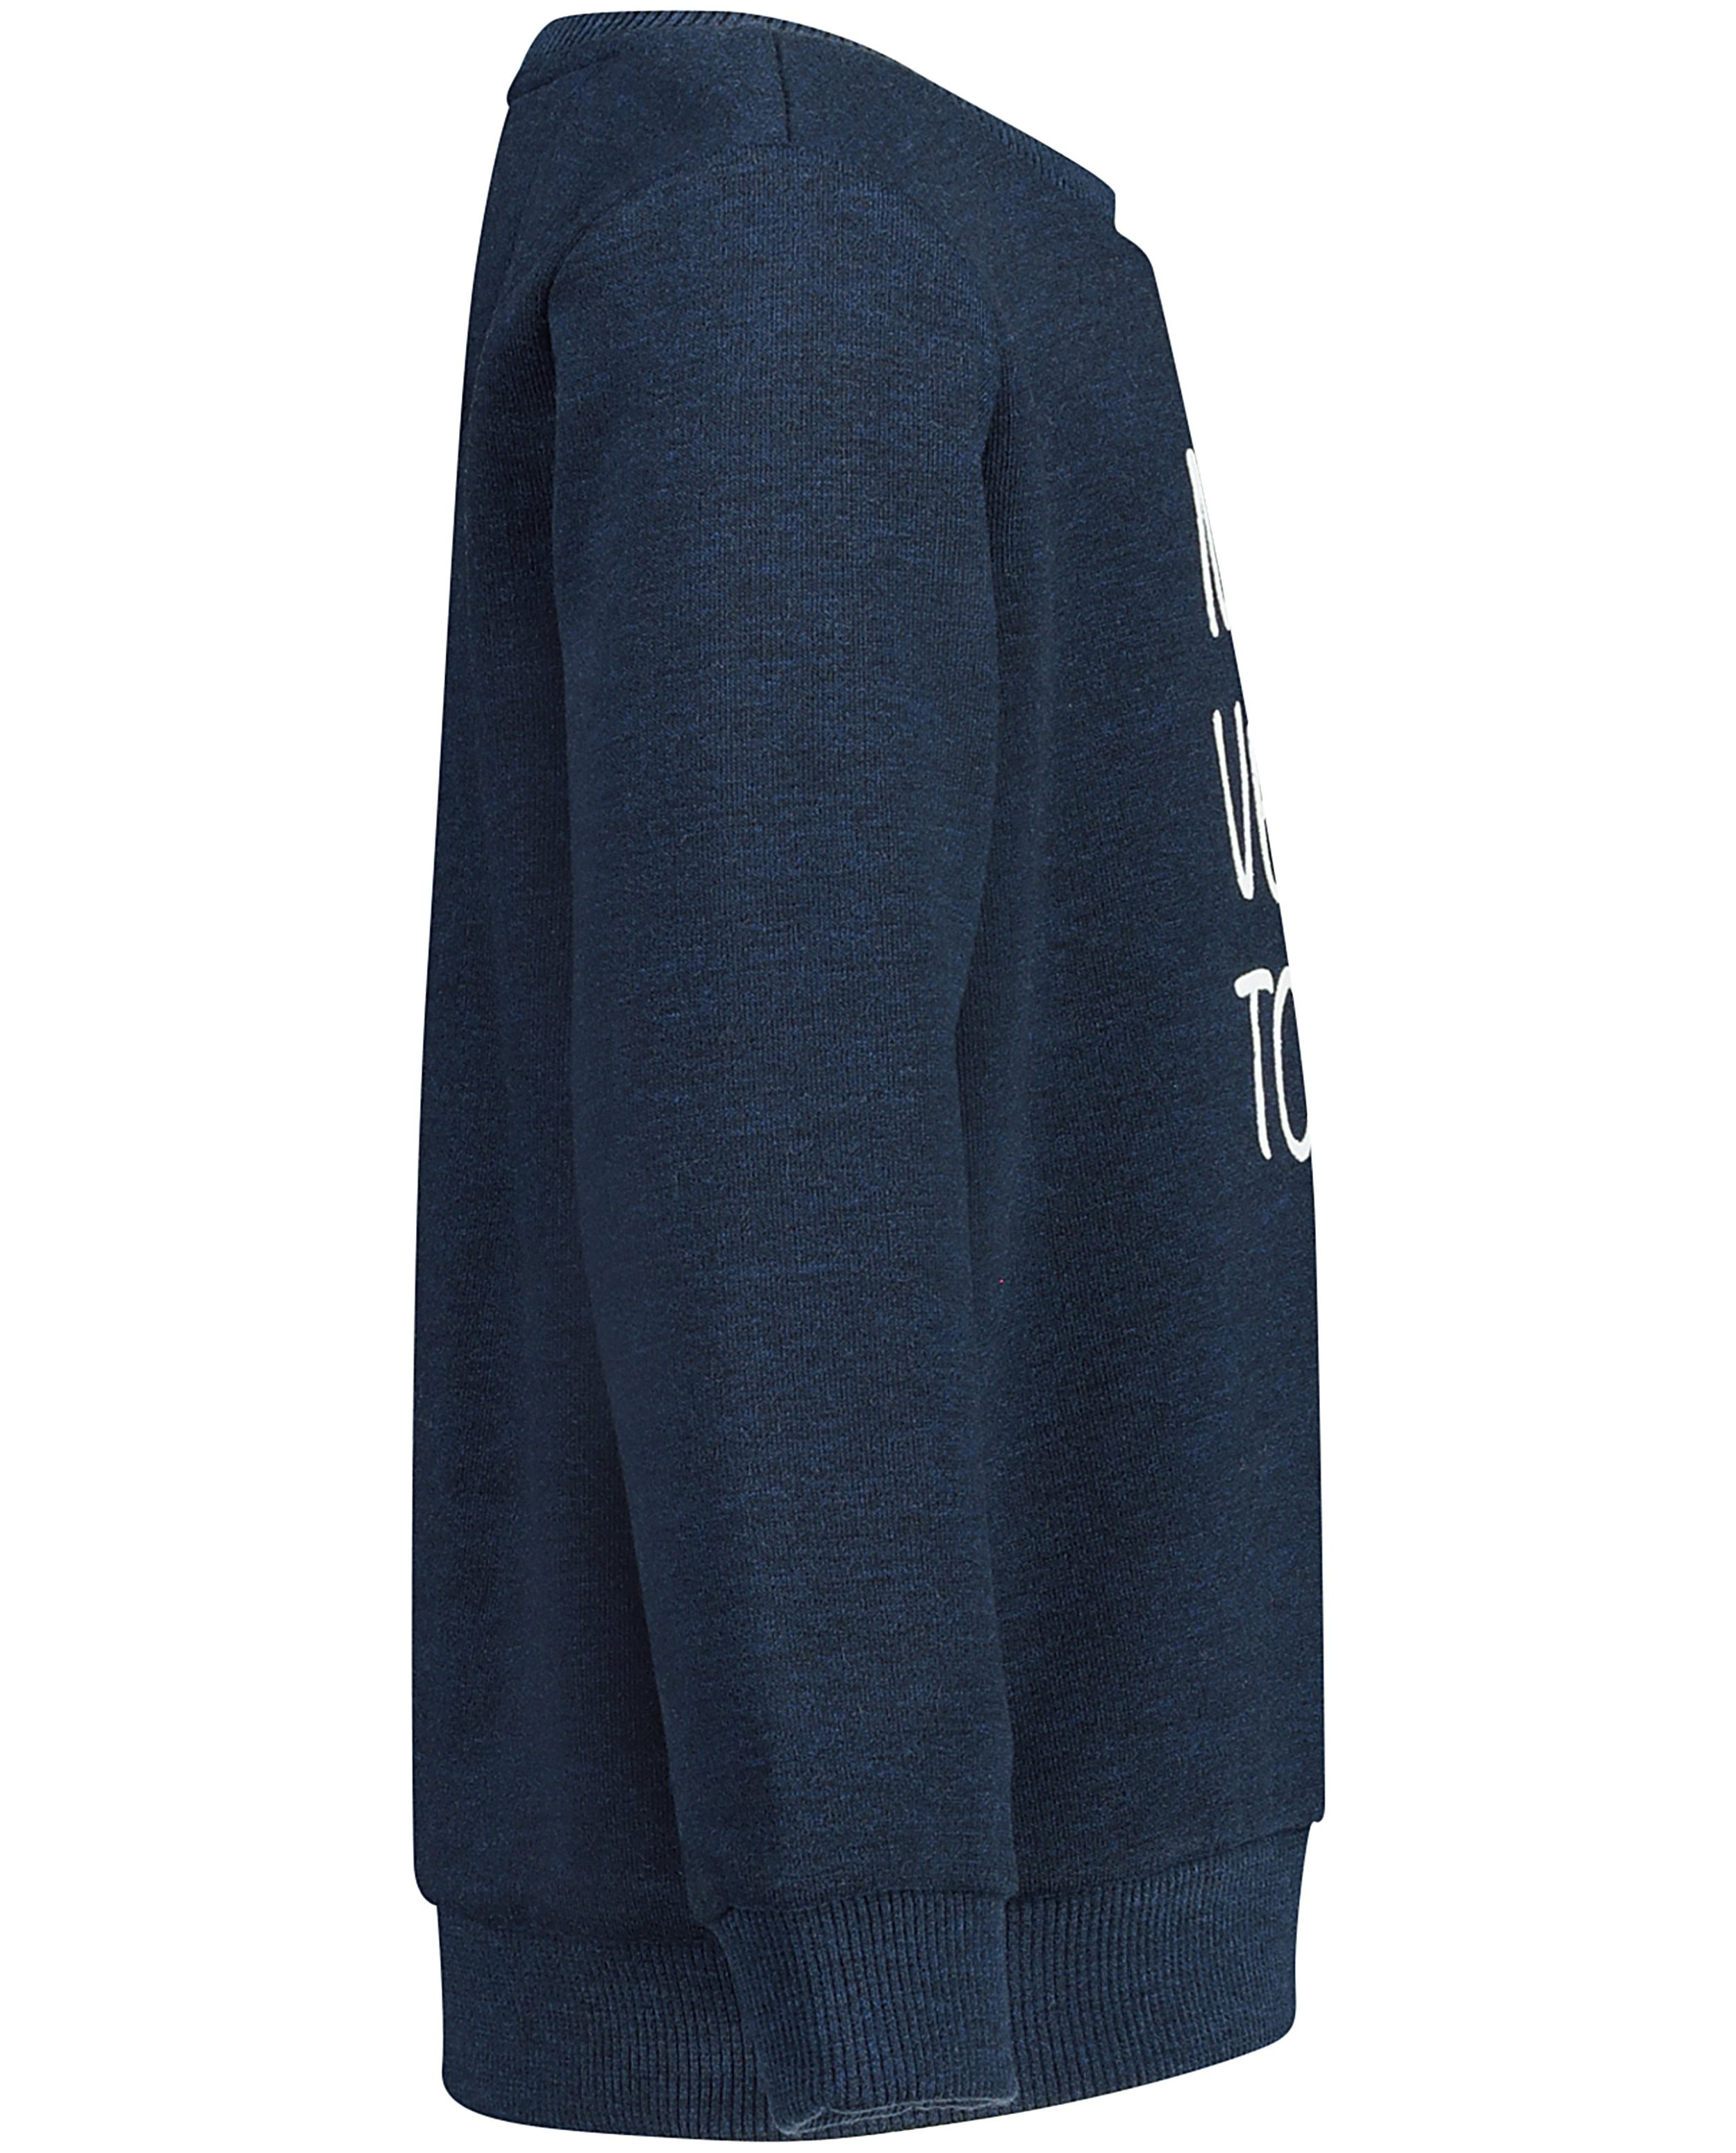 Sweaters - Blauwe unisex sweater, 2-7 jaar